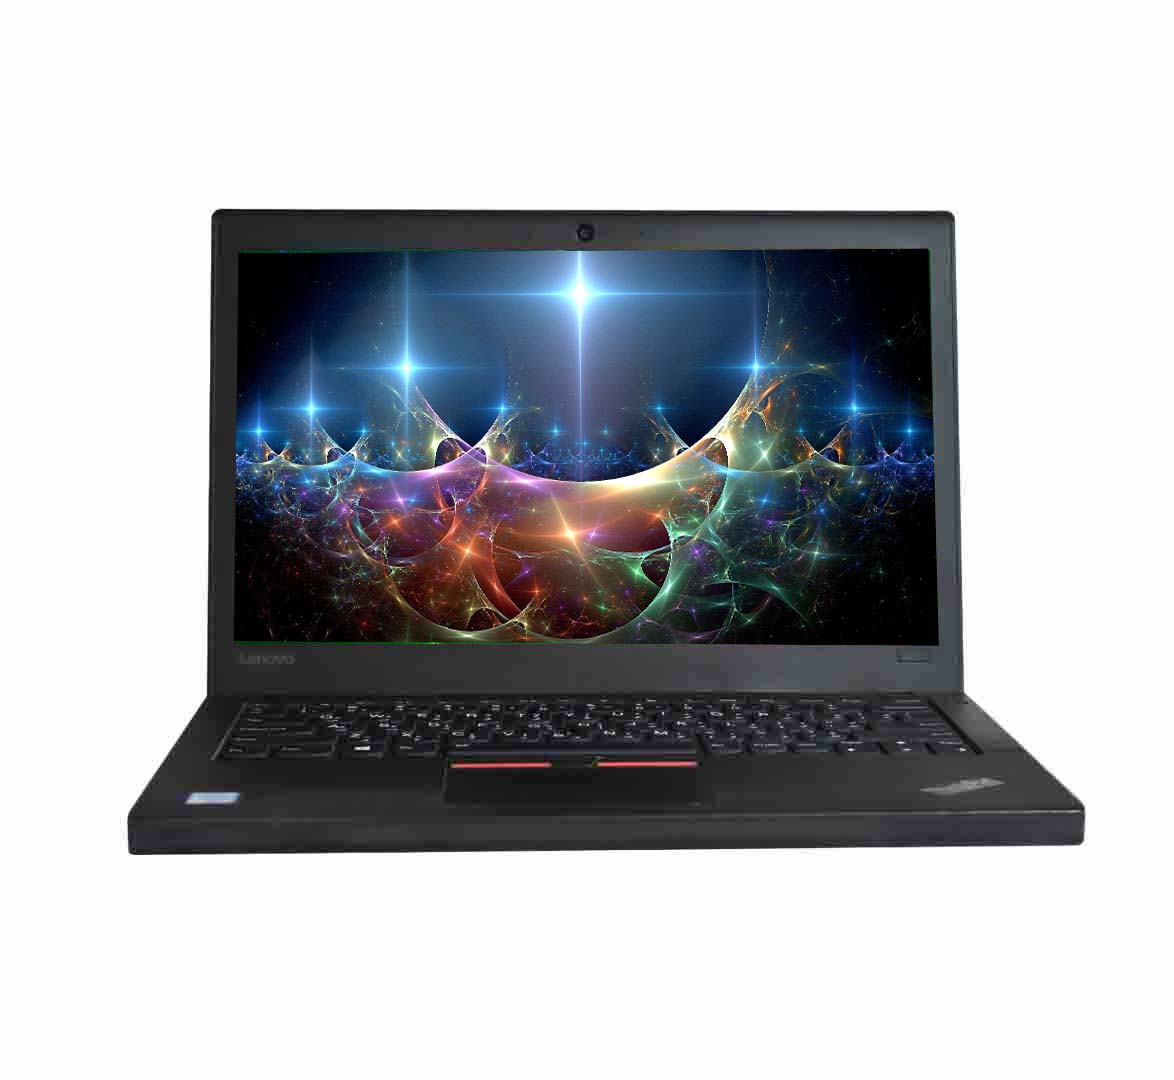 Lenovo ThinkPad X260 Business Laptop, Intel Core i3-6th Generation